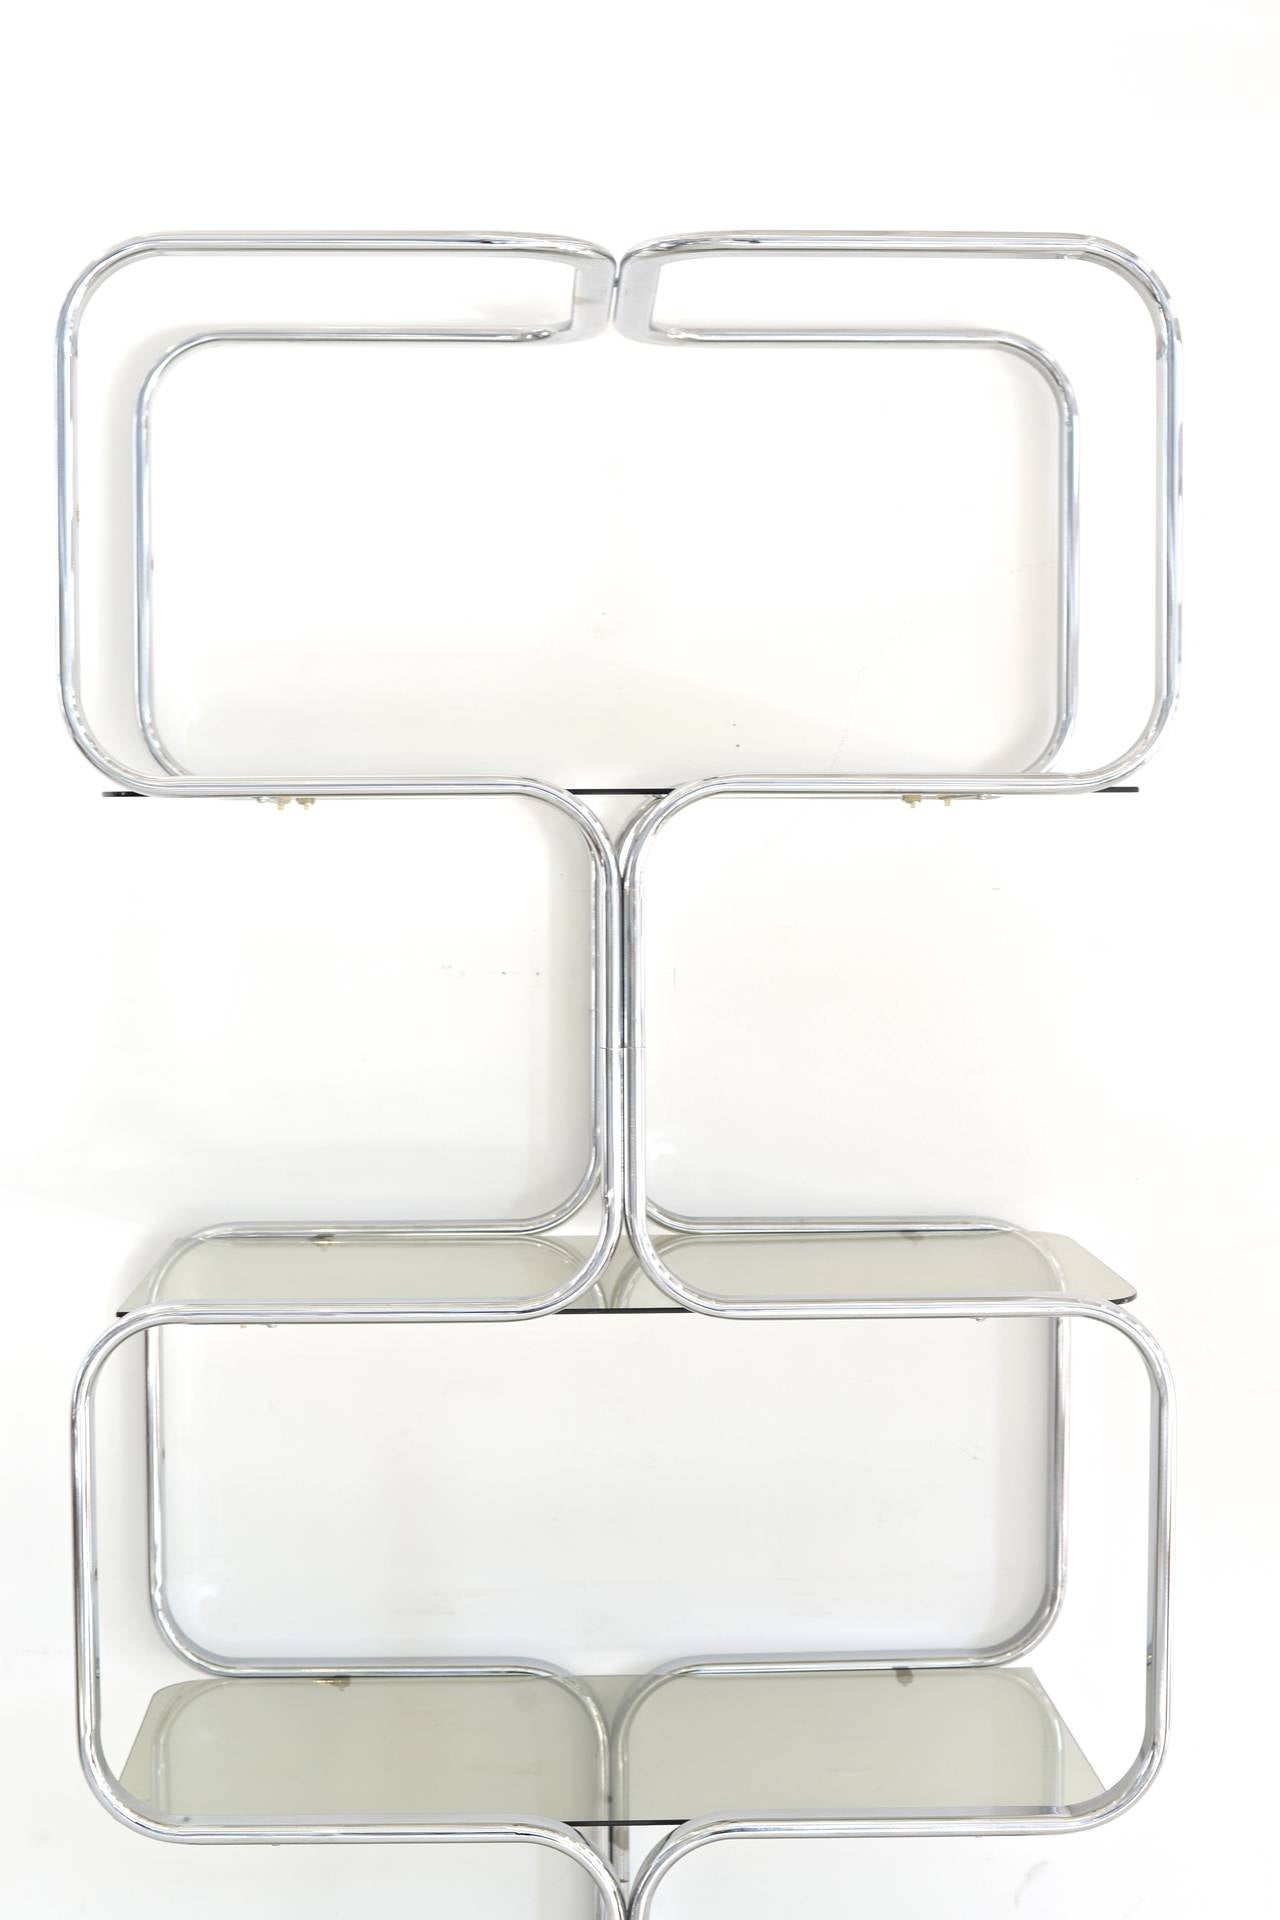 Chromed Etagere
smoked glass shelves
L 90 cm x D 47 cm x H 200 cm
Belgium, 1970s